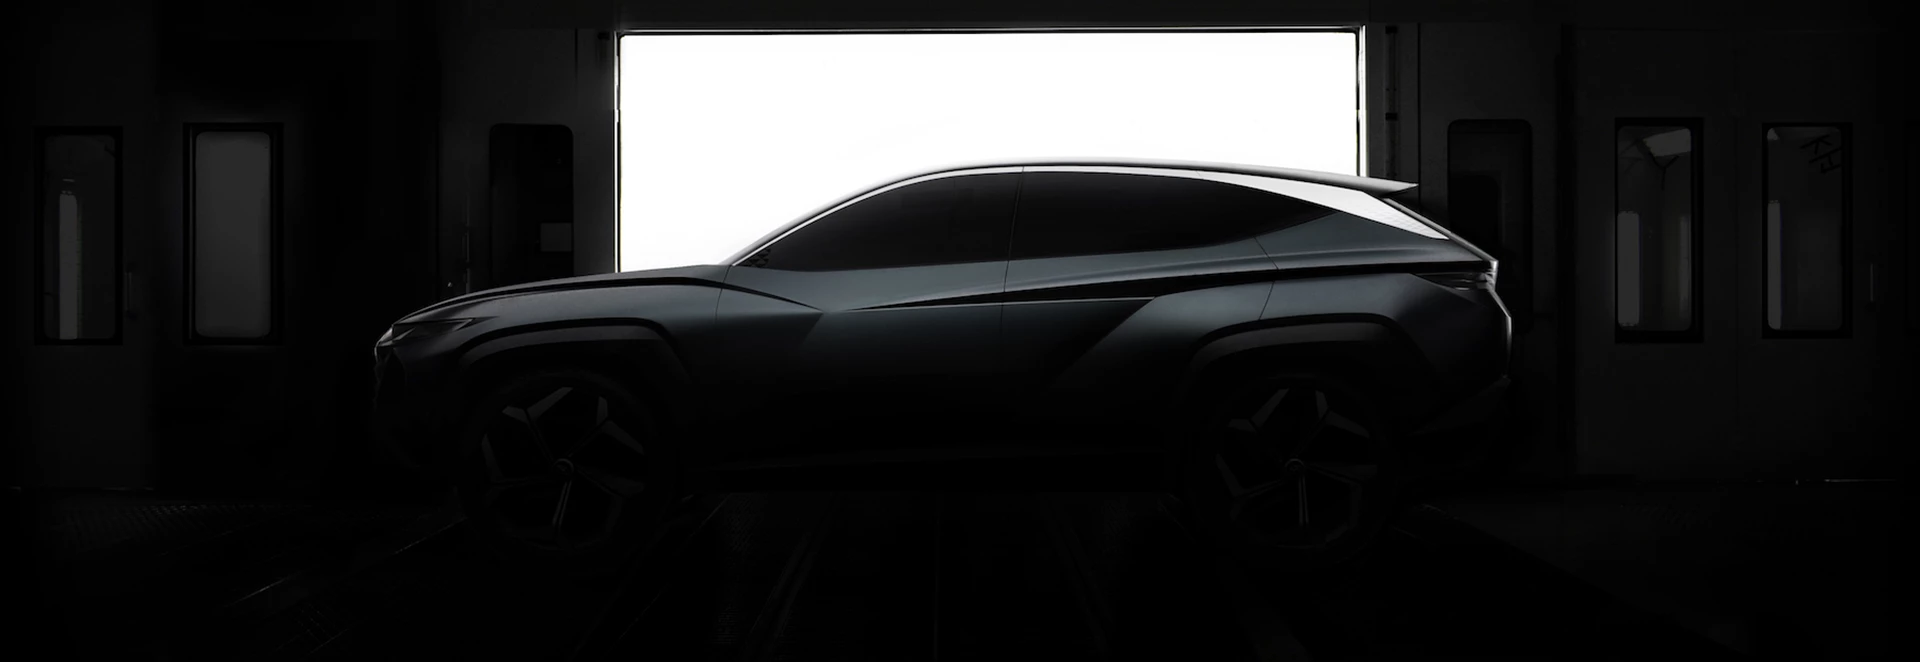 Hyundai teases new PHEV SUV concept ahead of LA Auto Show debut